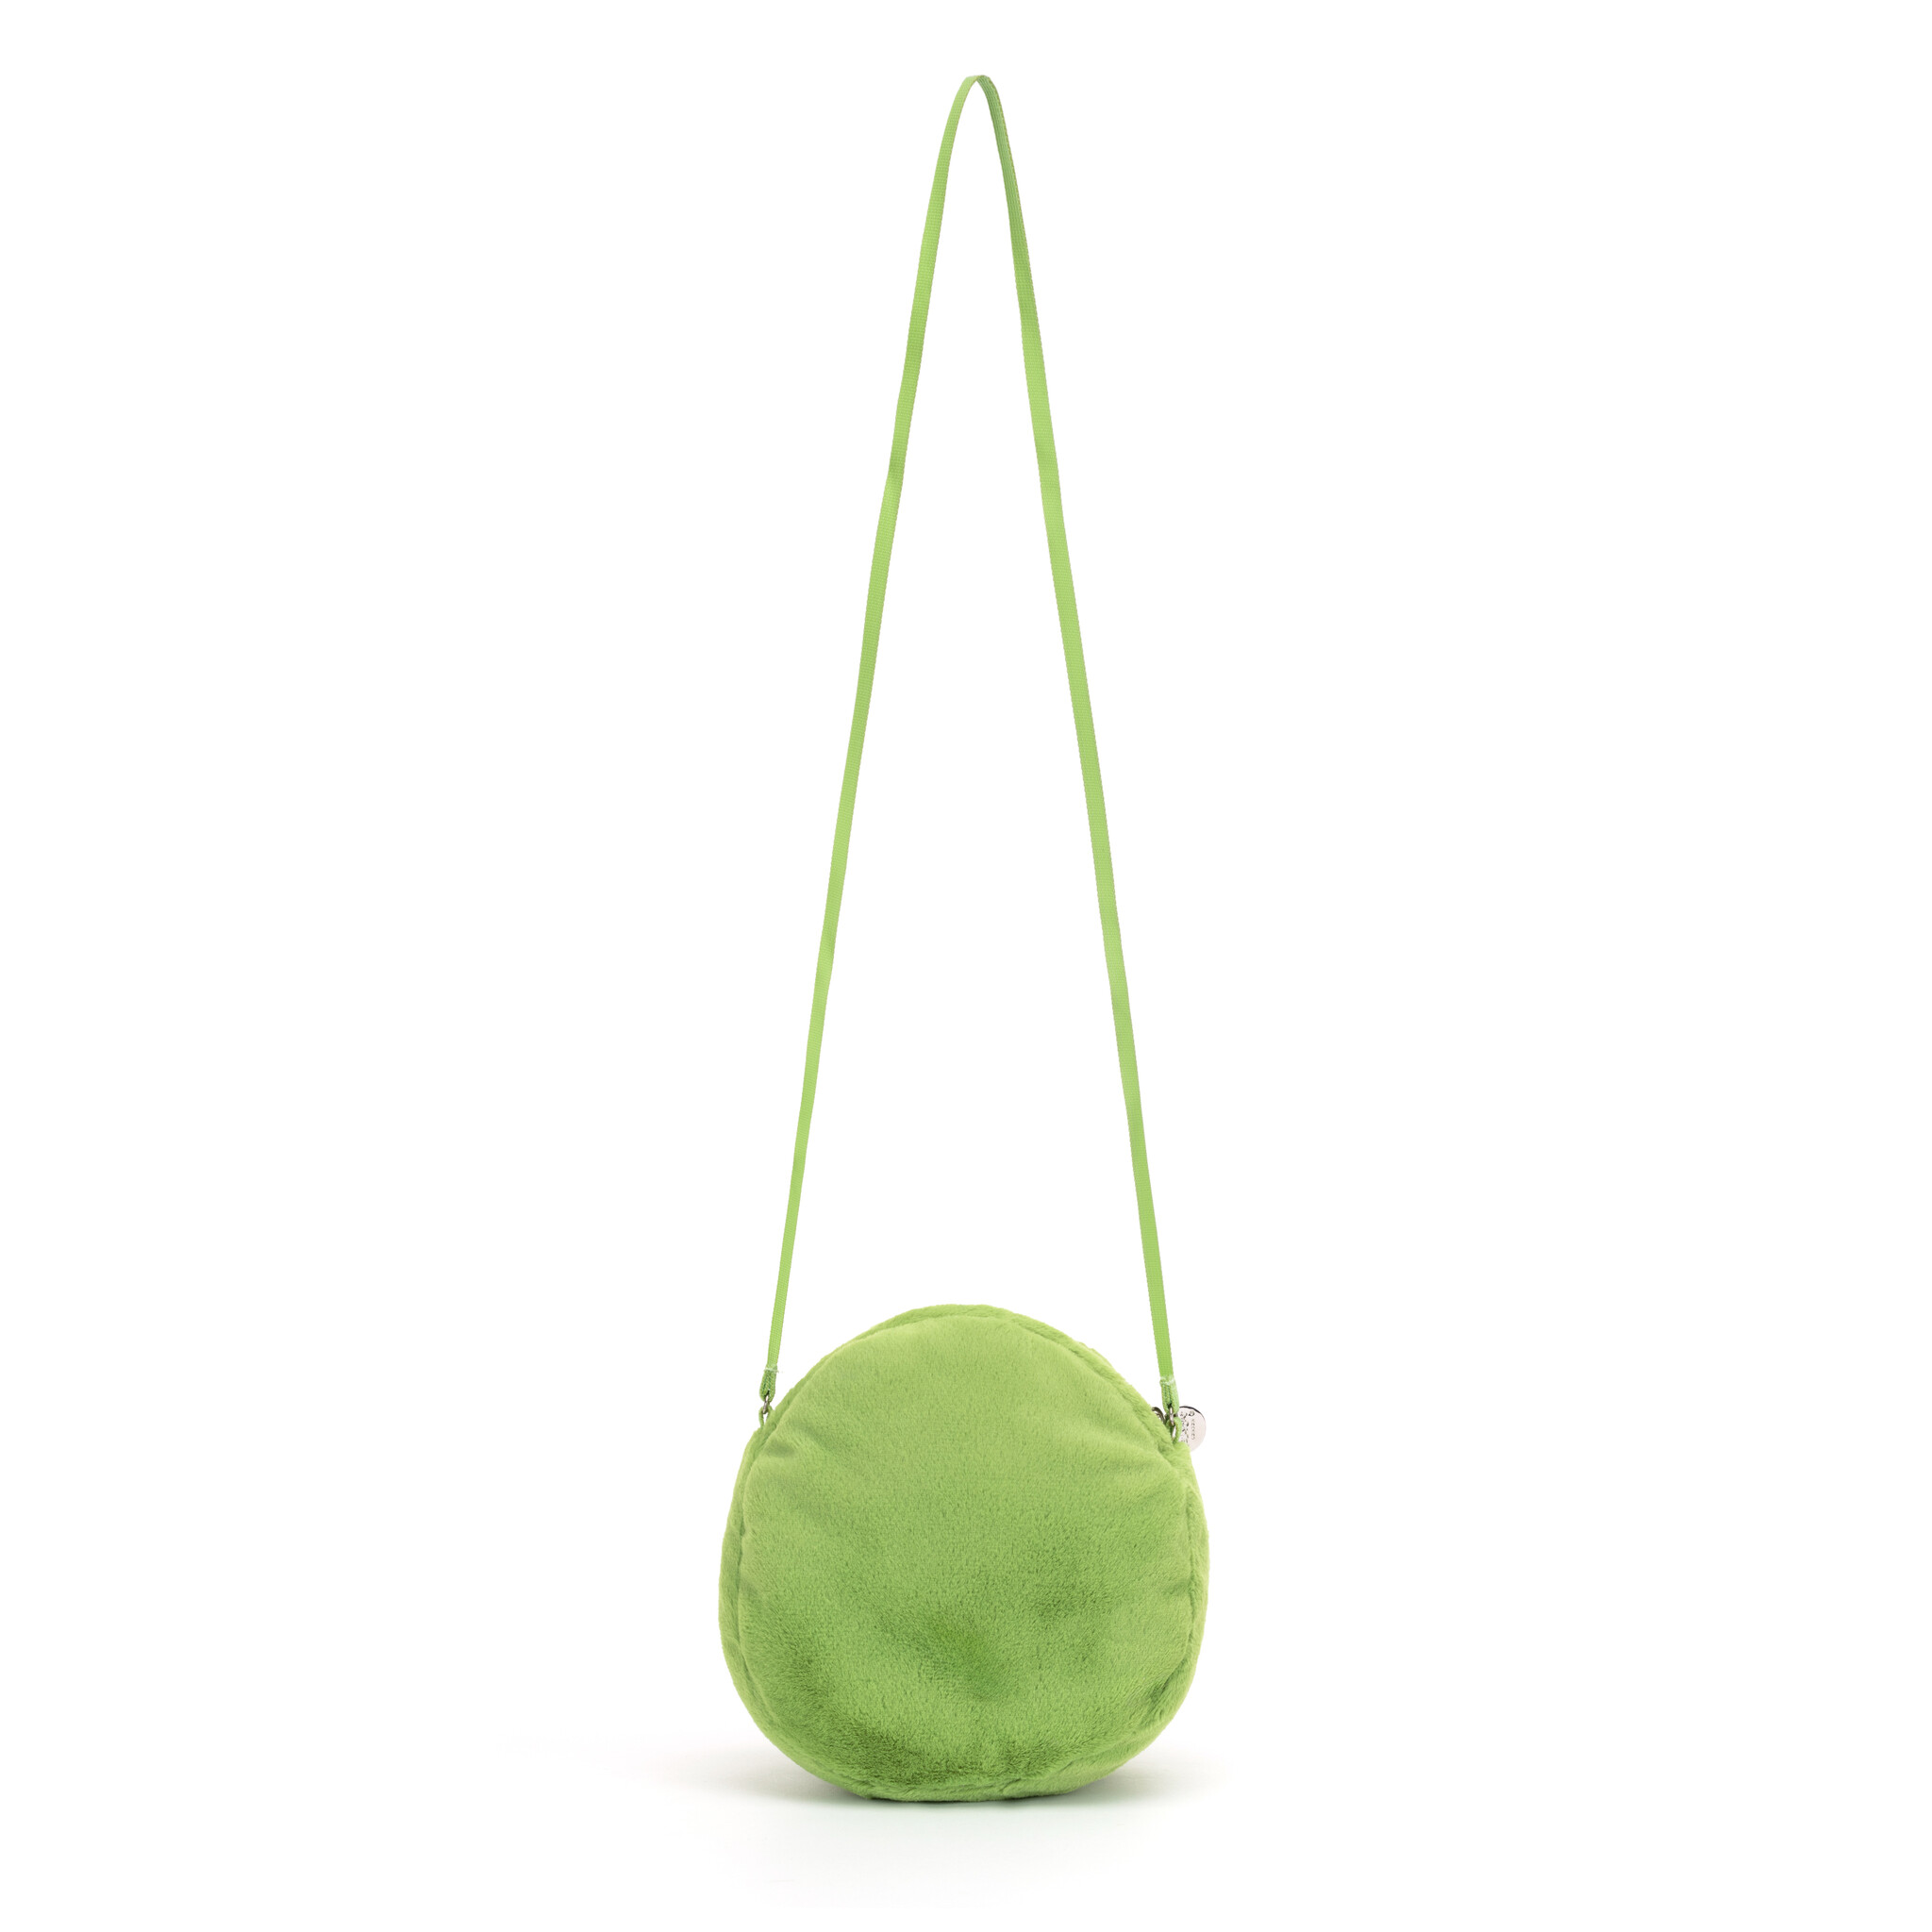 JellyCat: Ricky Rain Frog Bag